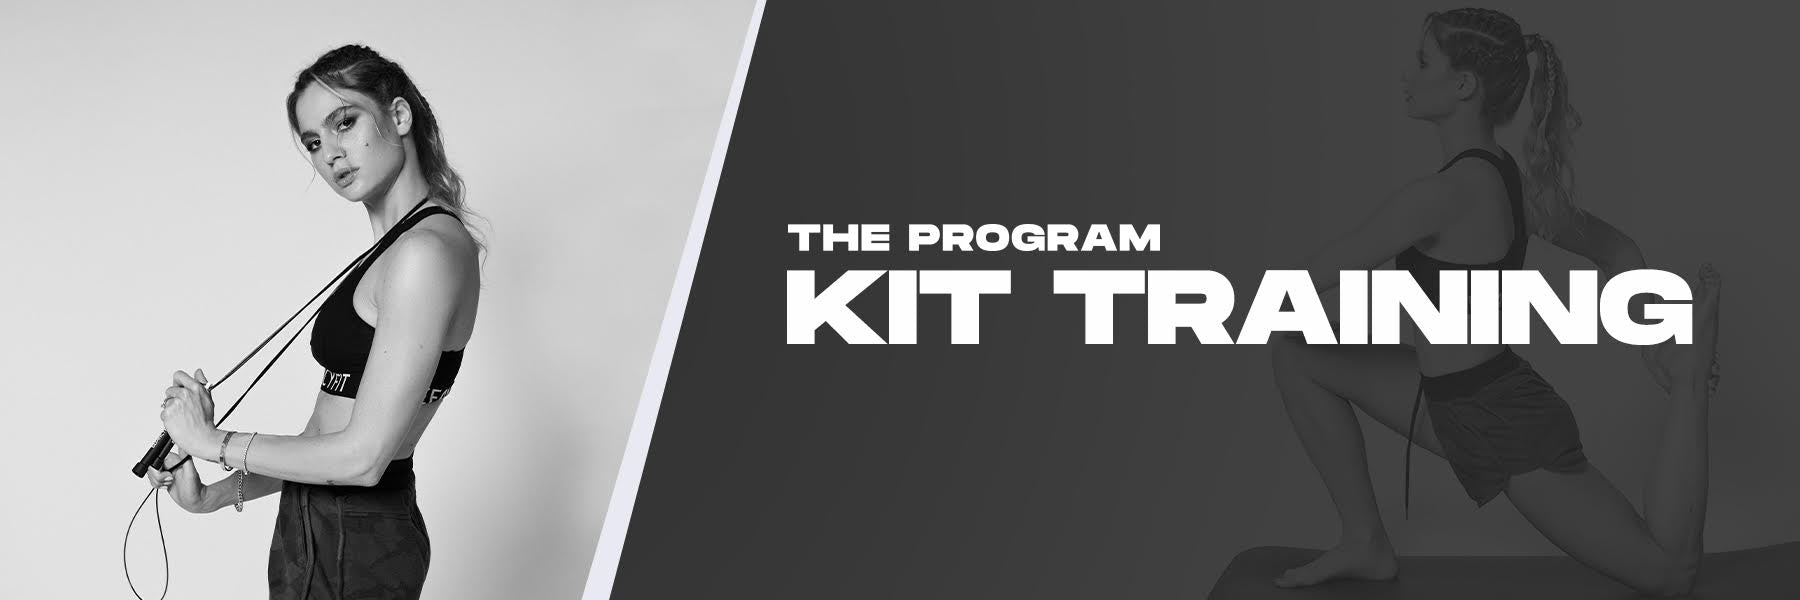 kit training - the program -cristina marino